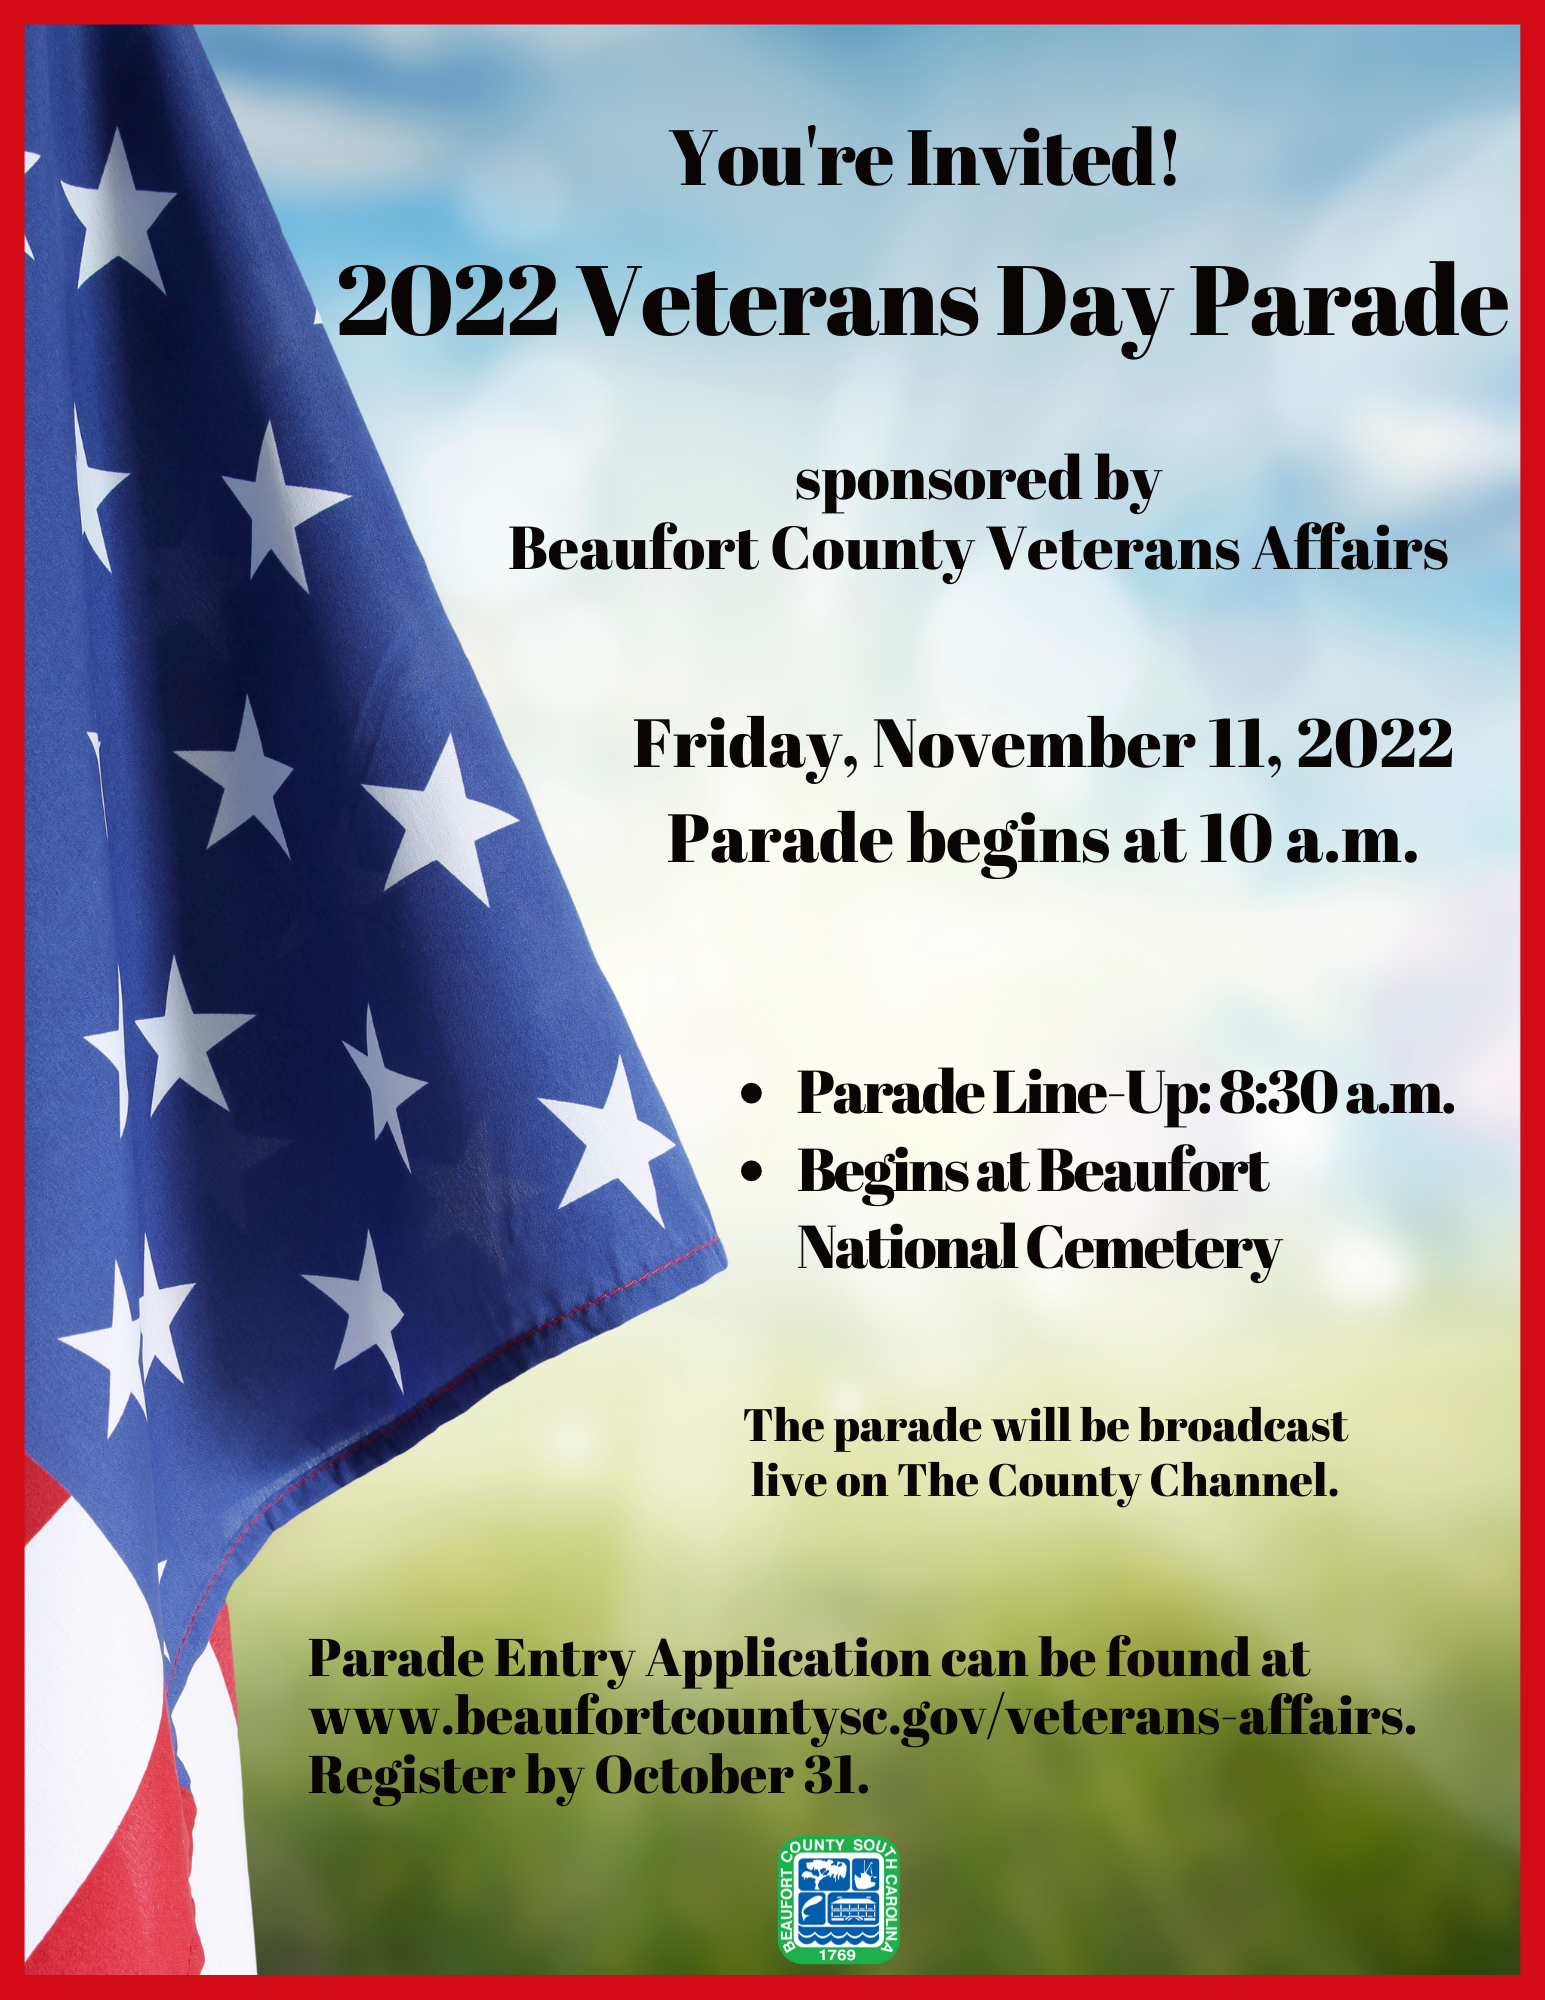 Beaufort County Veterans Affairs Department Hosting  Veterans Day Parade